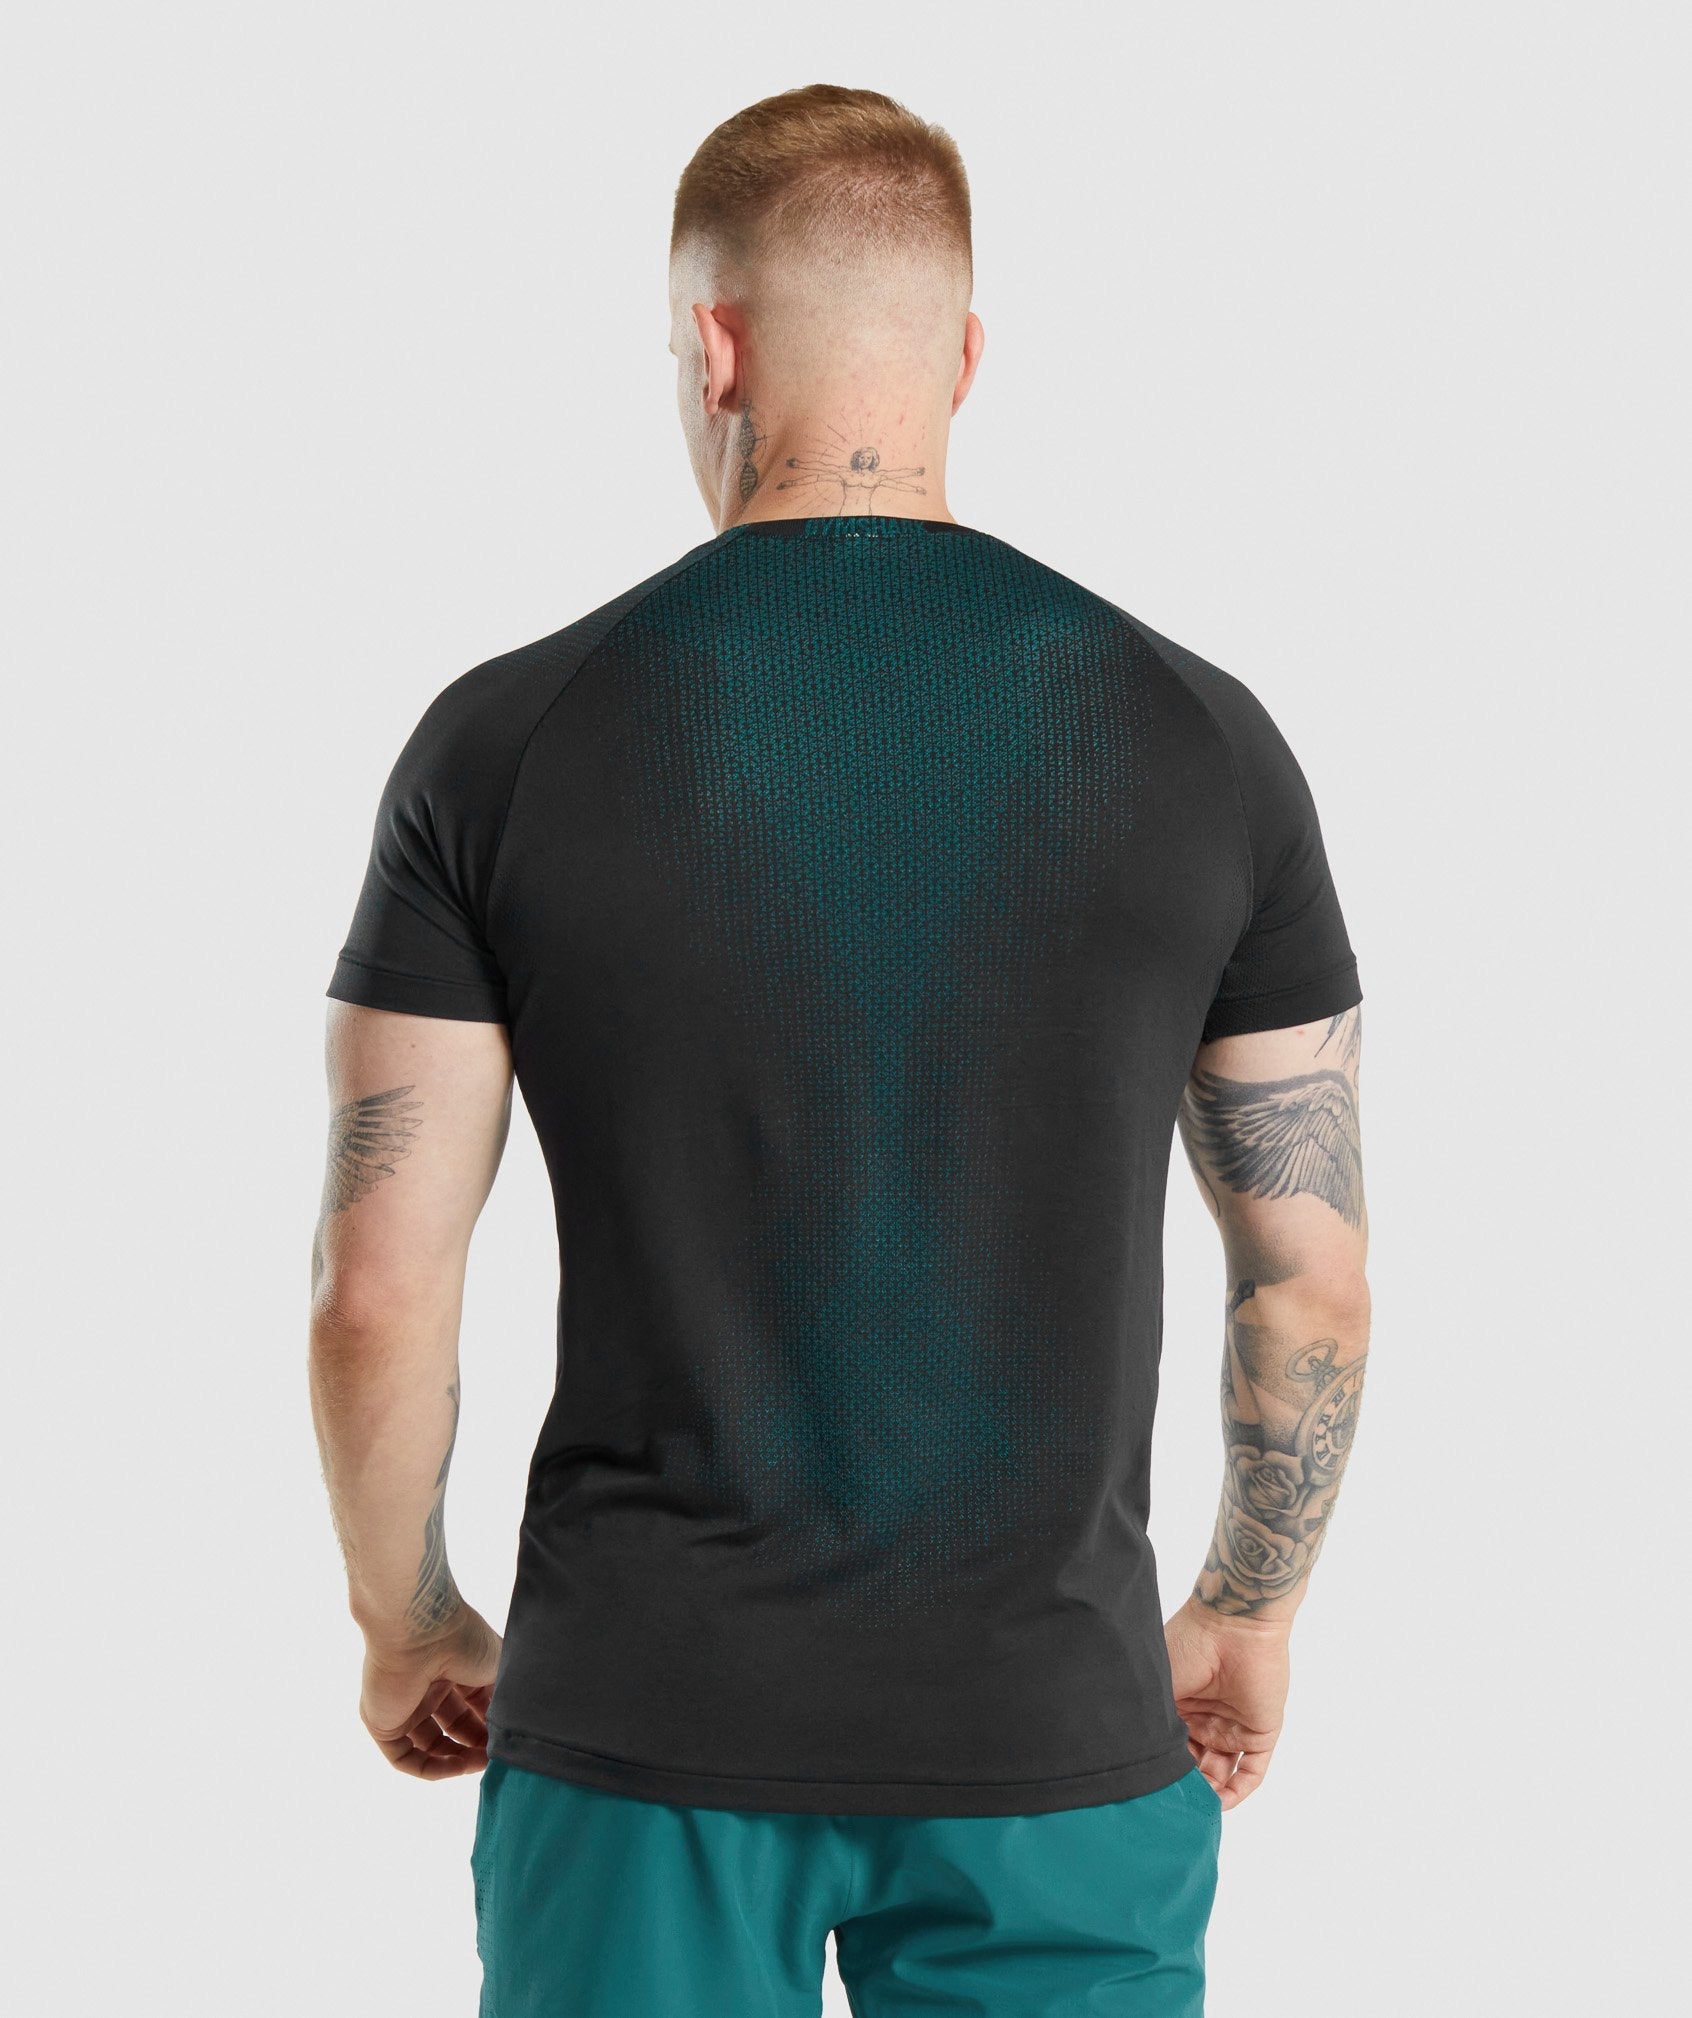 Gymshark Apex Long Sleeve T-Shirt - Smokey Teal/Darkest Teal